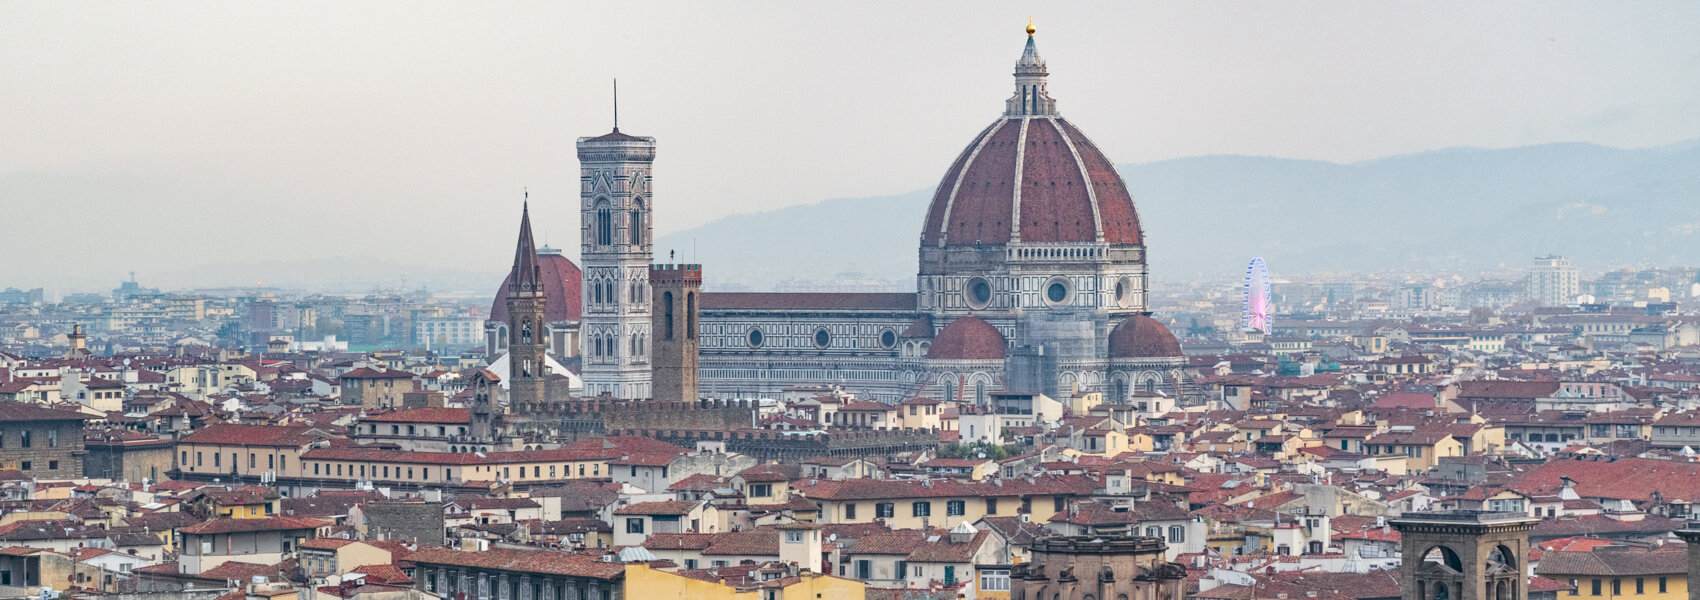 Visiter le duomo de Florence